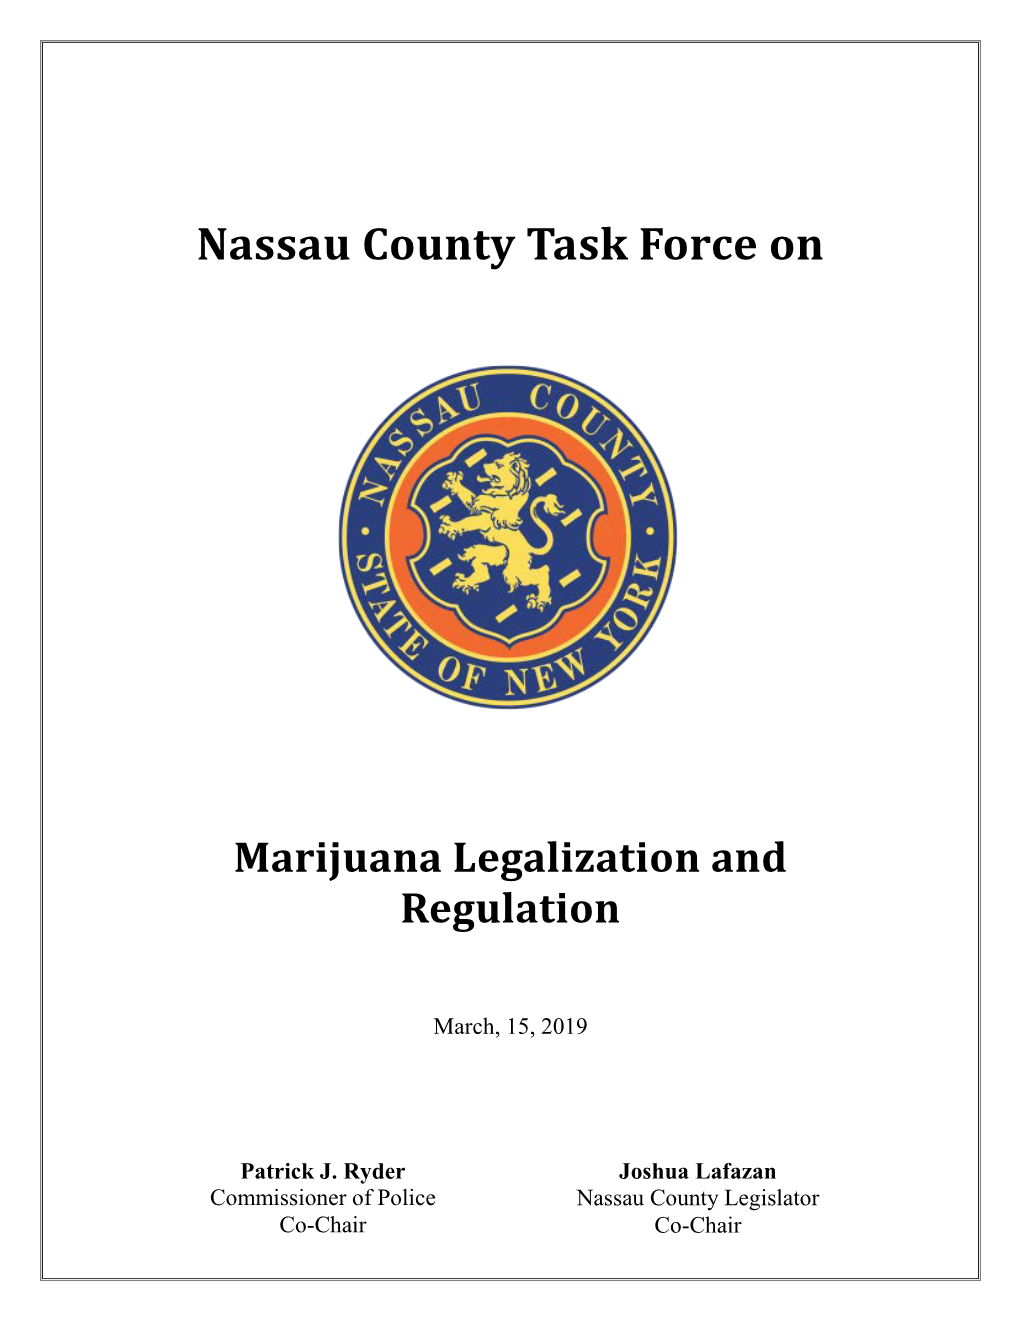 Nassau County Task Force on Marijuana Legalization And